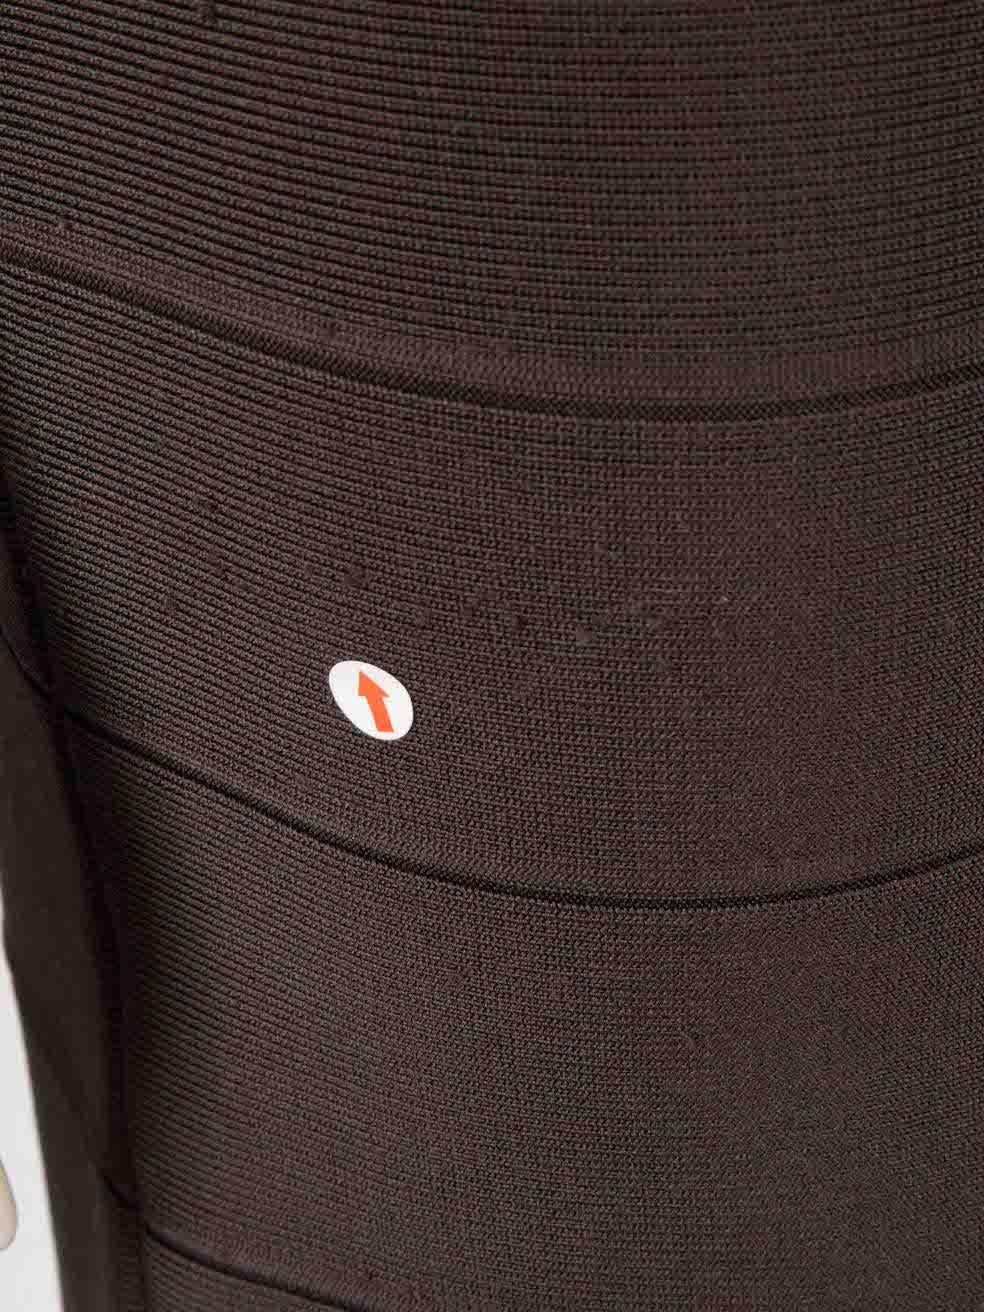 Herve Leger Brown Square Neck Bandage Midi Dress Size XS For Sale 3